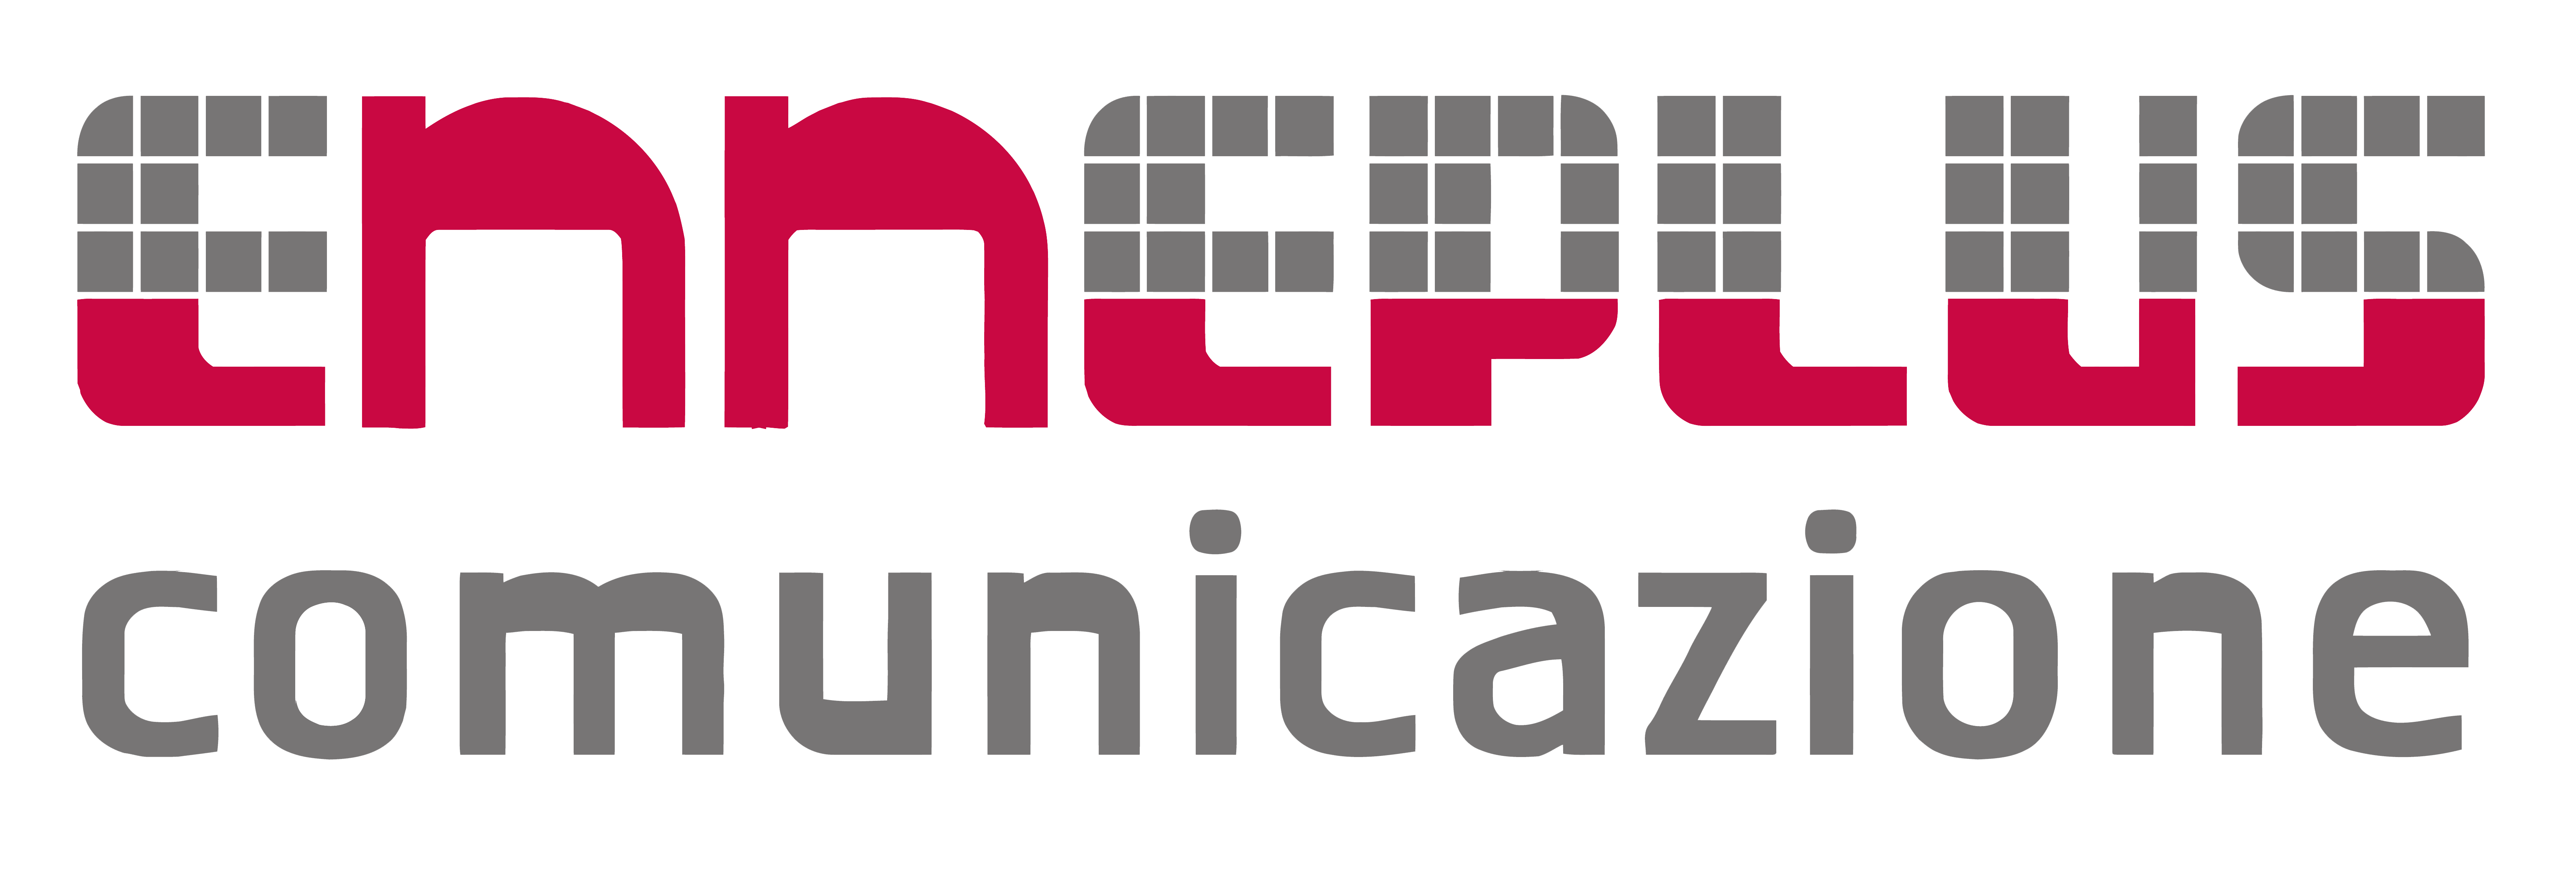 Enneplus Agenzia di Comunicazione - Logo